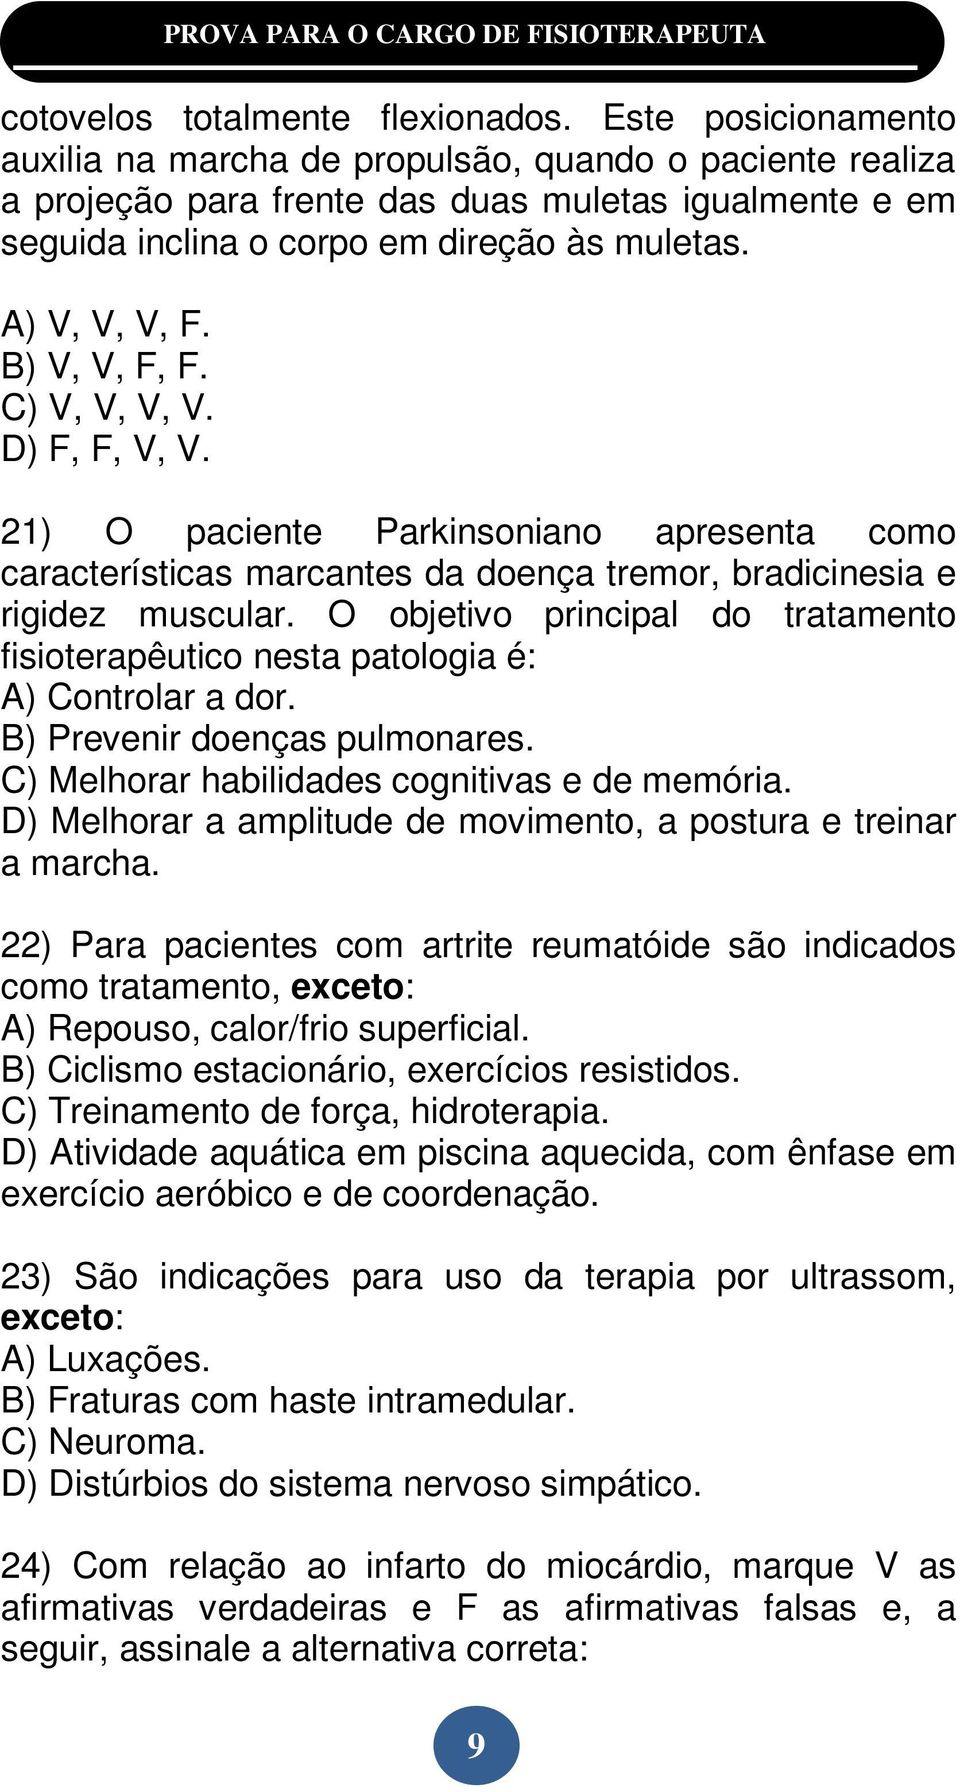 B) V, V, F, F. C) V, V, V, V. D) F, F, V, V. 21) O paciente Parkinsoniano apresenta como características marcantes da doença tremor, bradicinesia e rigidez muscular.